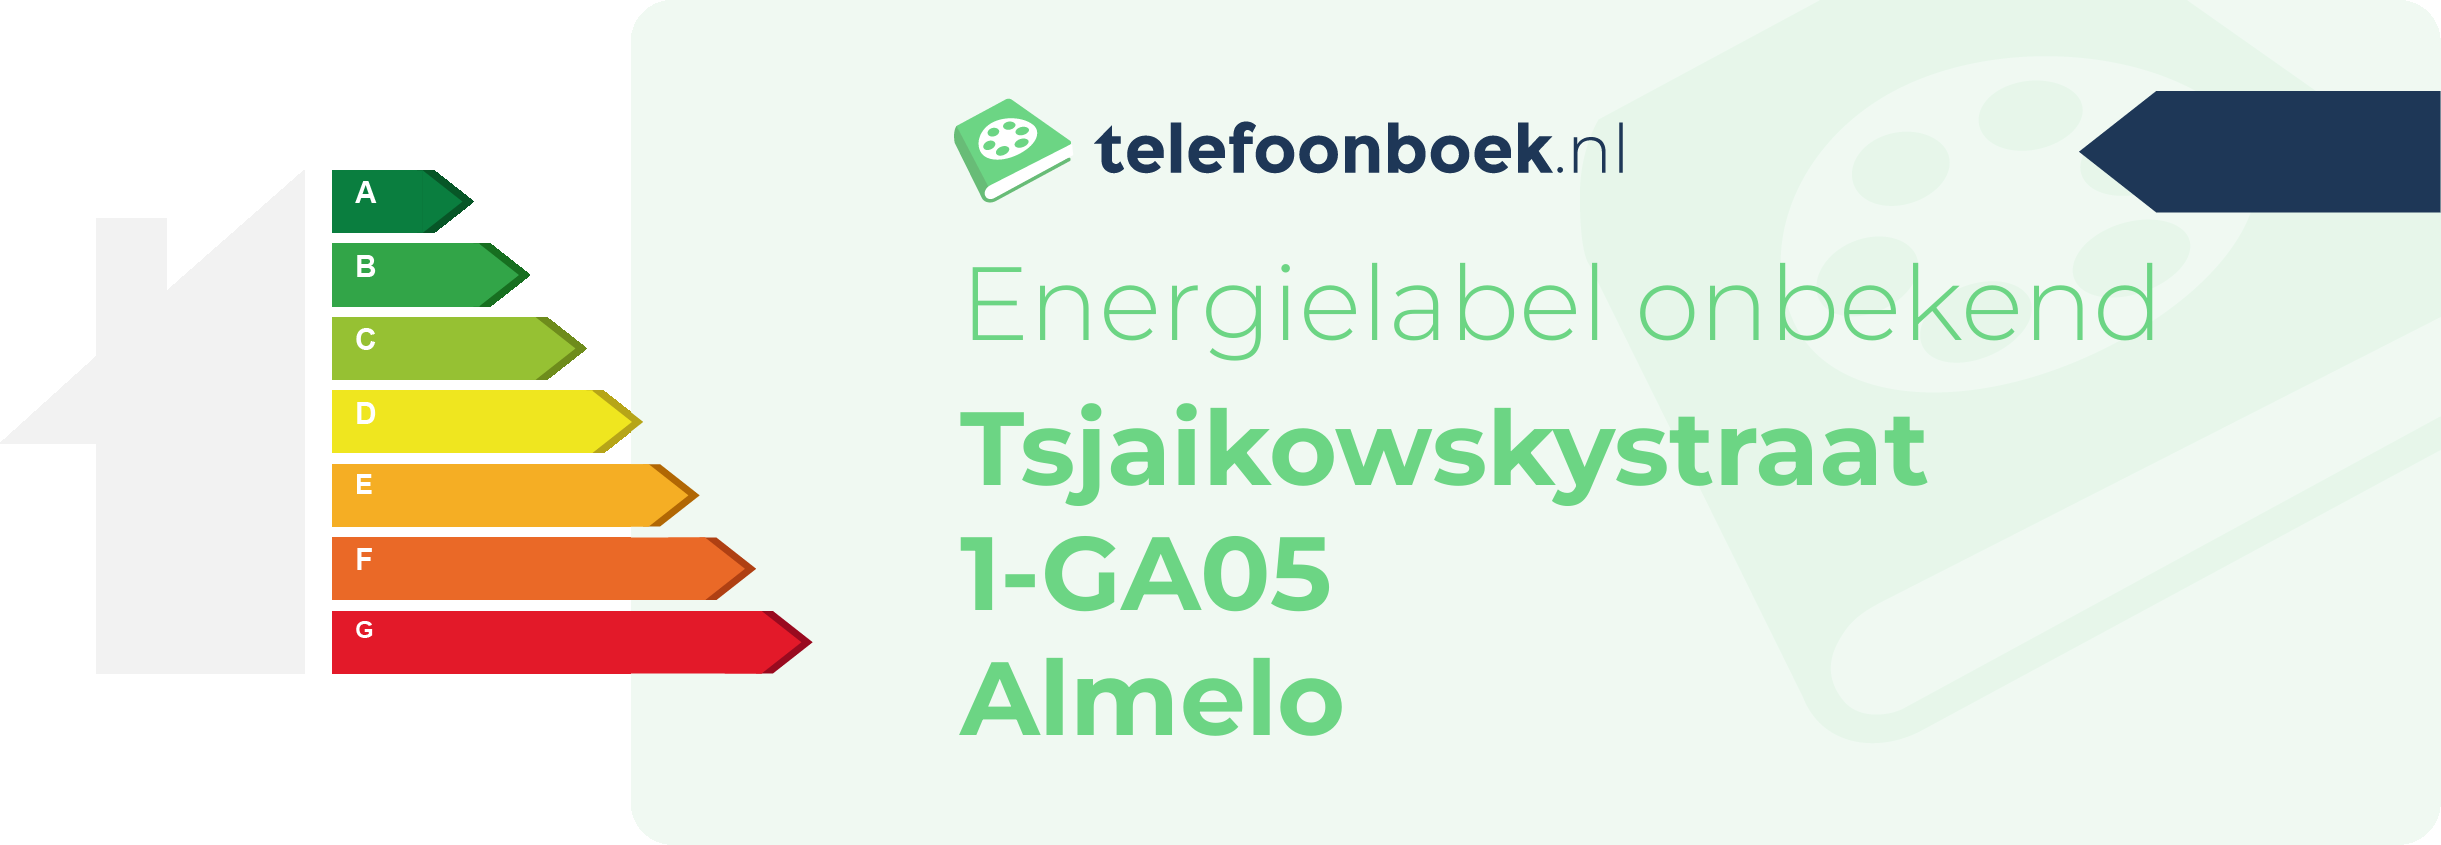 Energielabel Tsjaikowskystraat 1-GA05 Almelo